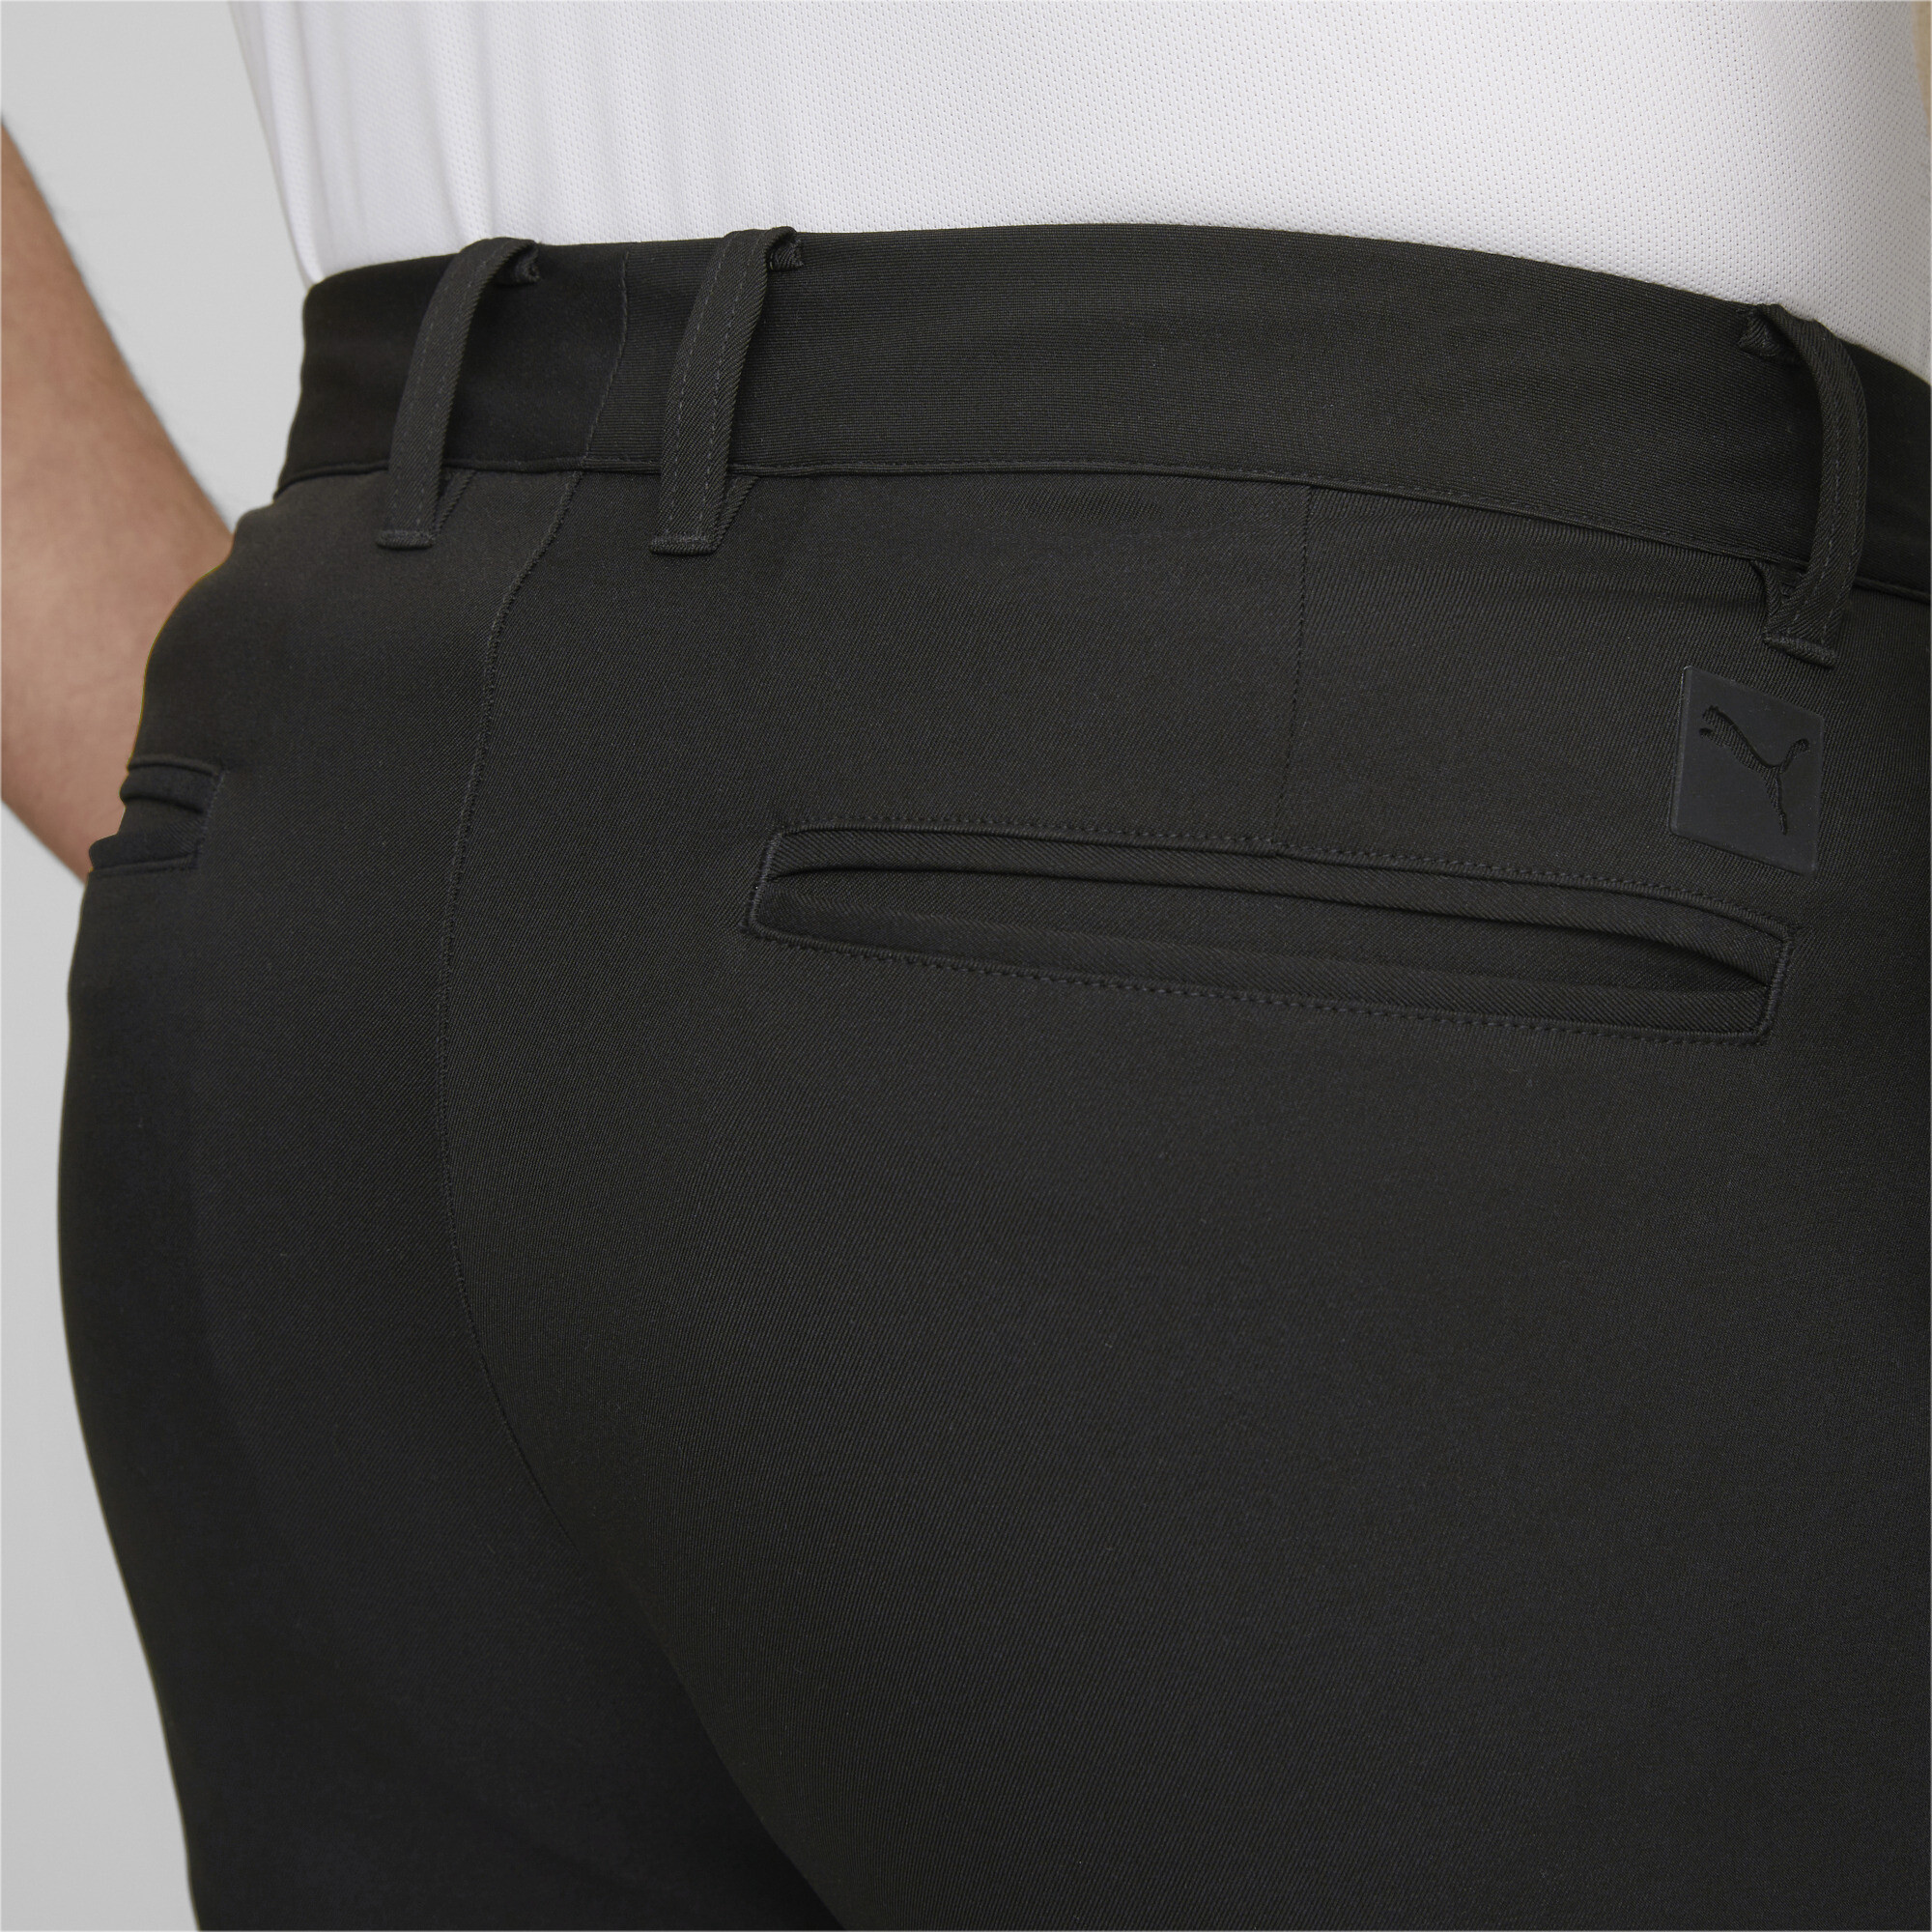 Men's Puma Dealer Golf Pants, Black, Size 29/32, Clothing